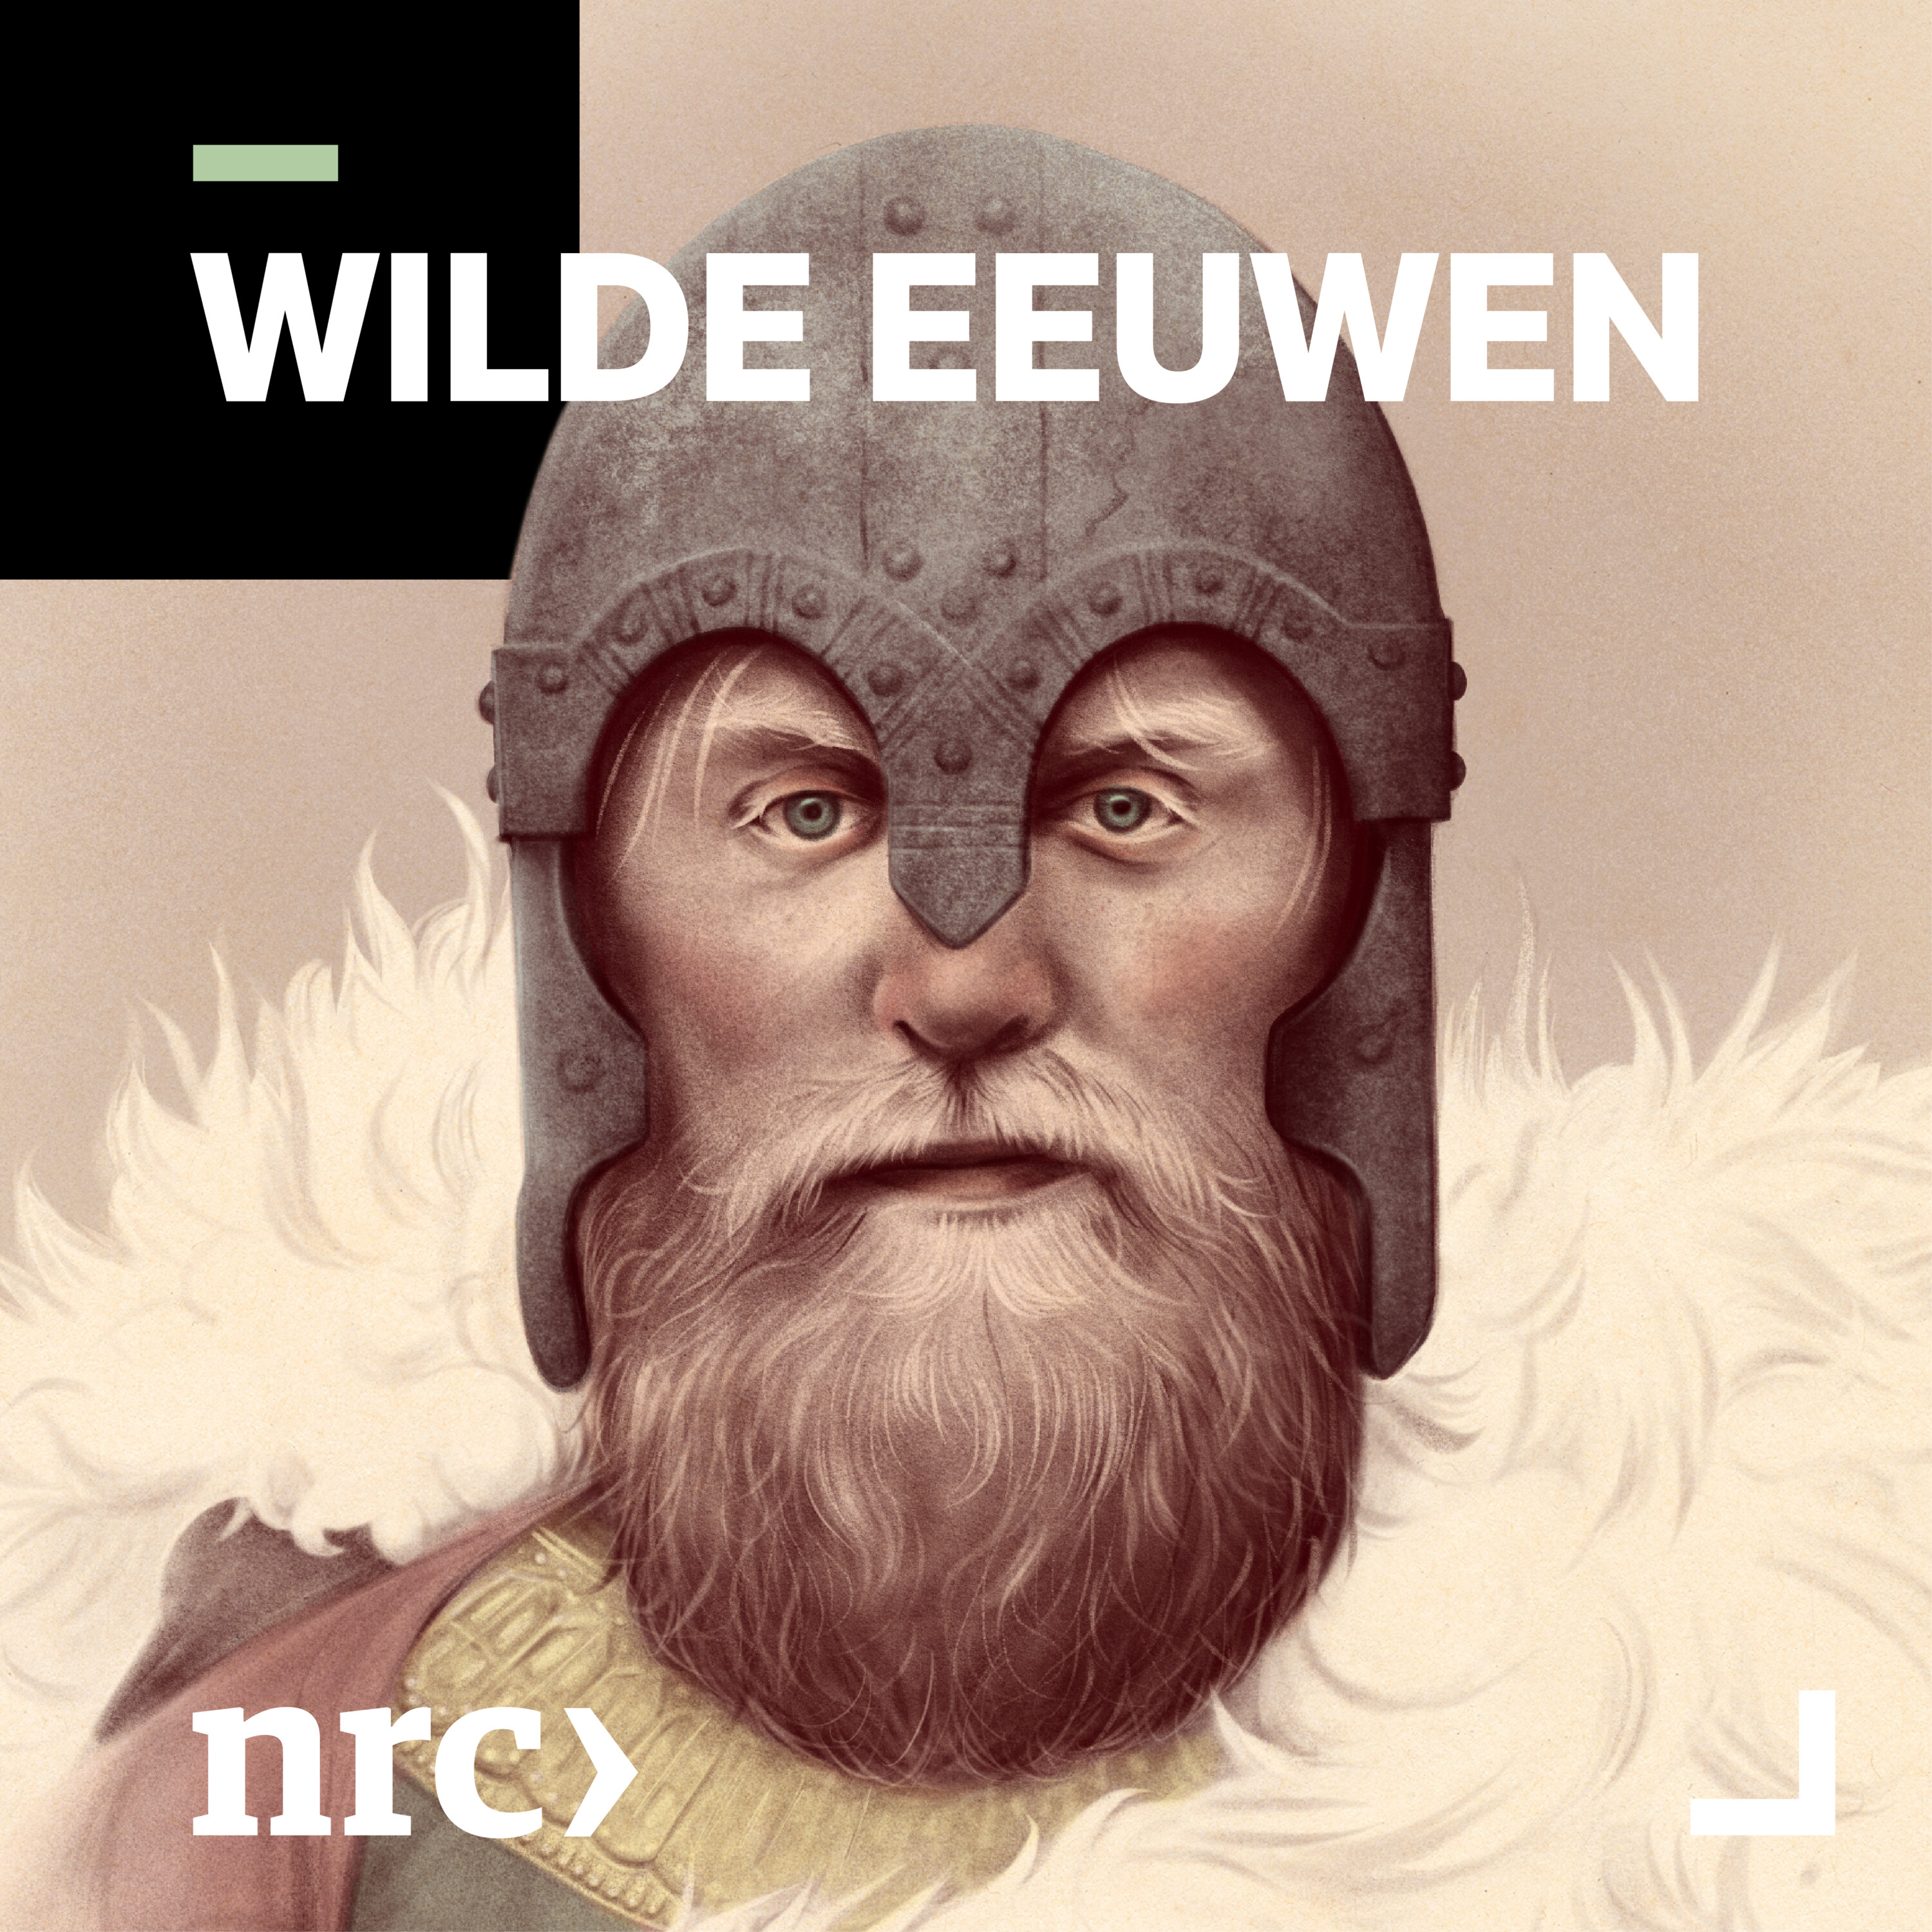 Wilde Eeuwen logo